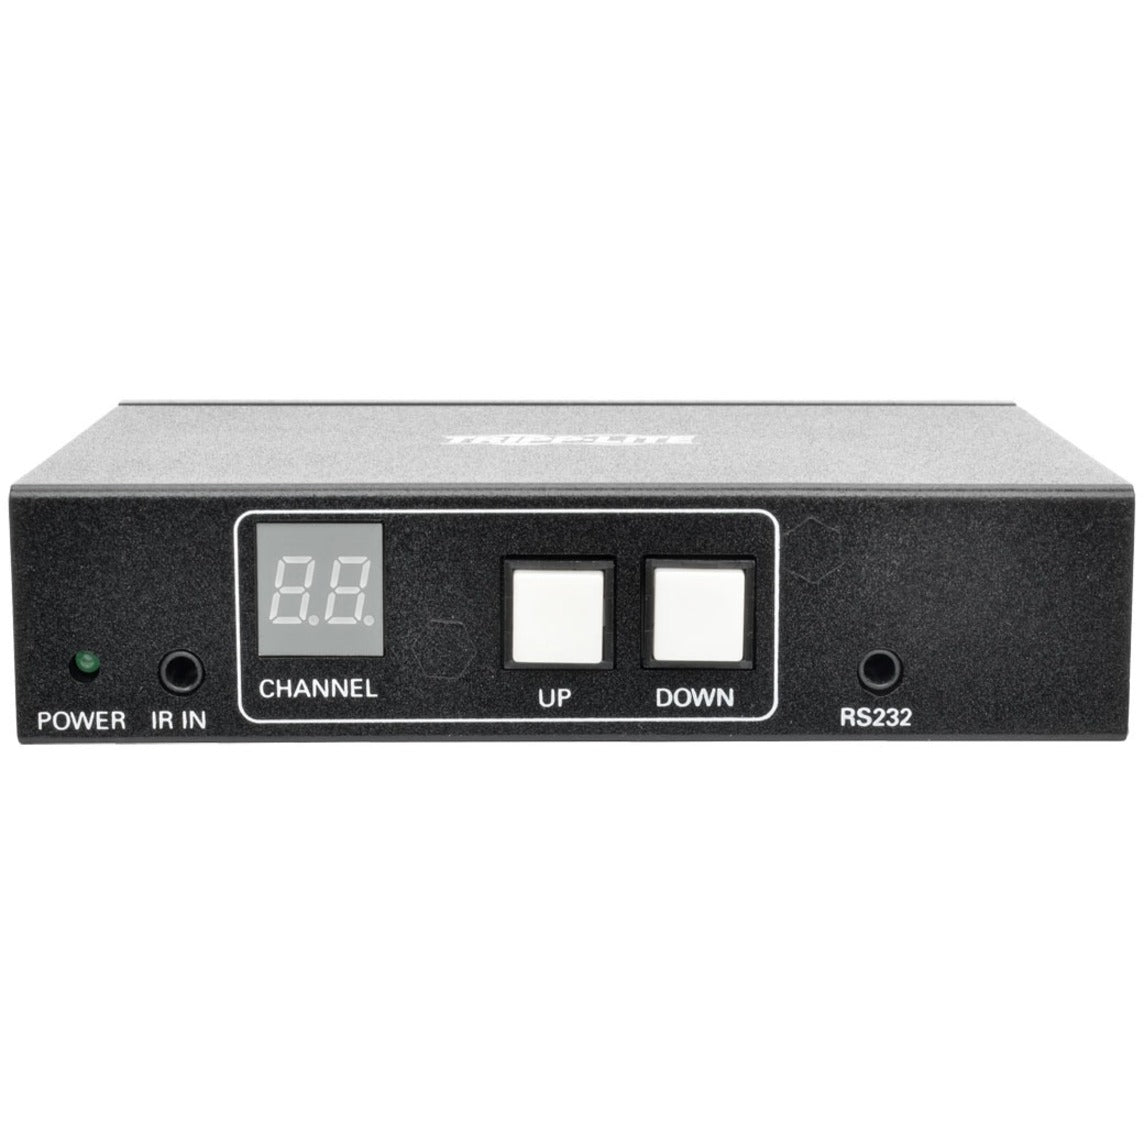 Tripp Lite B160-100-DPSI Receiver Unit, Full HD Video Extender Receiver, 1920 x 1080 Resolution, 1 Year Warranty